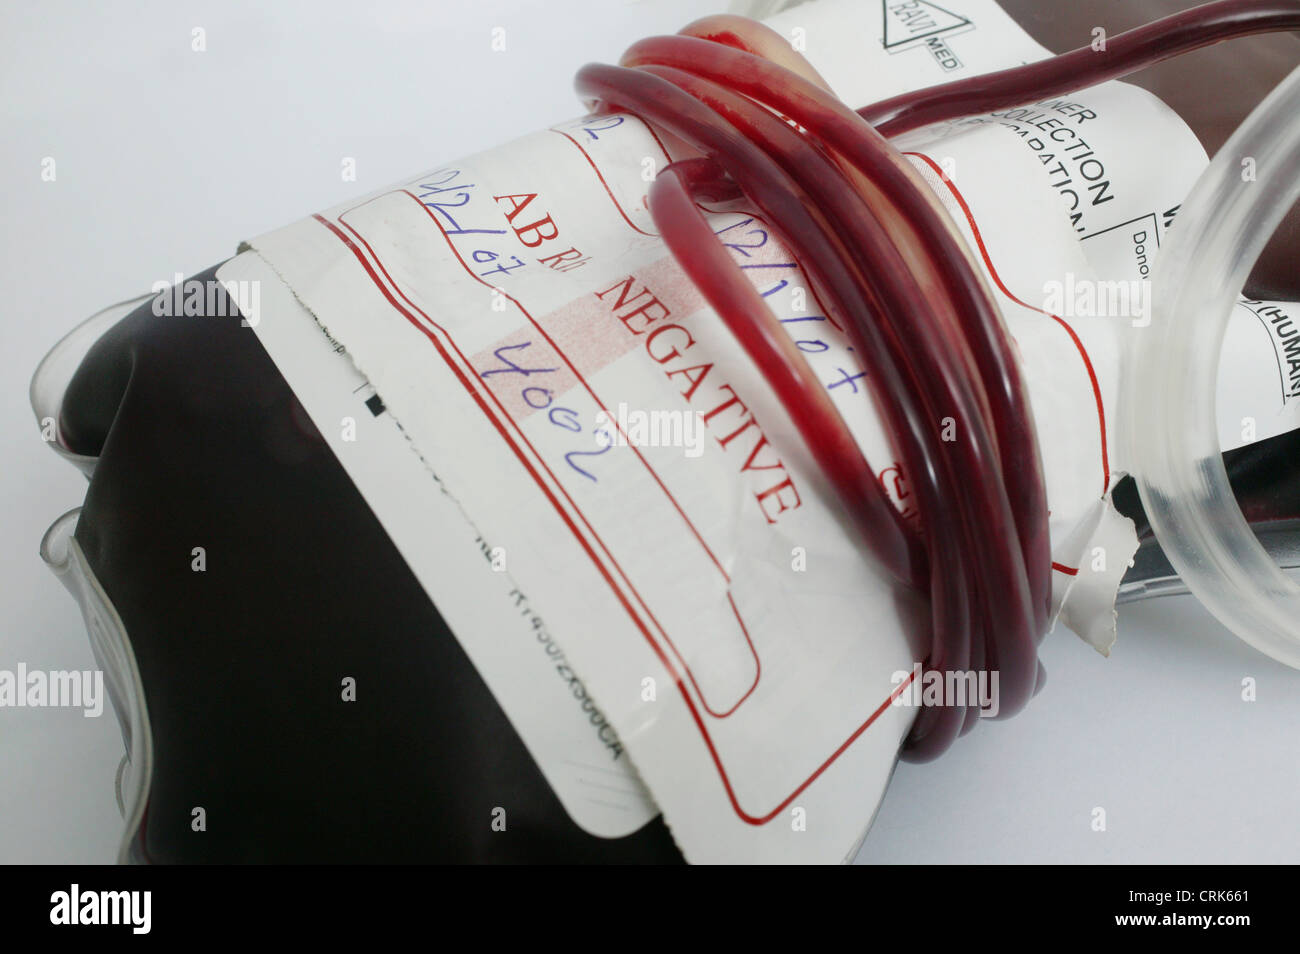 Type AB negative blood bag Stock Photo